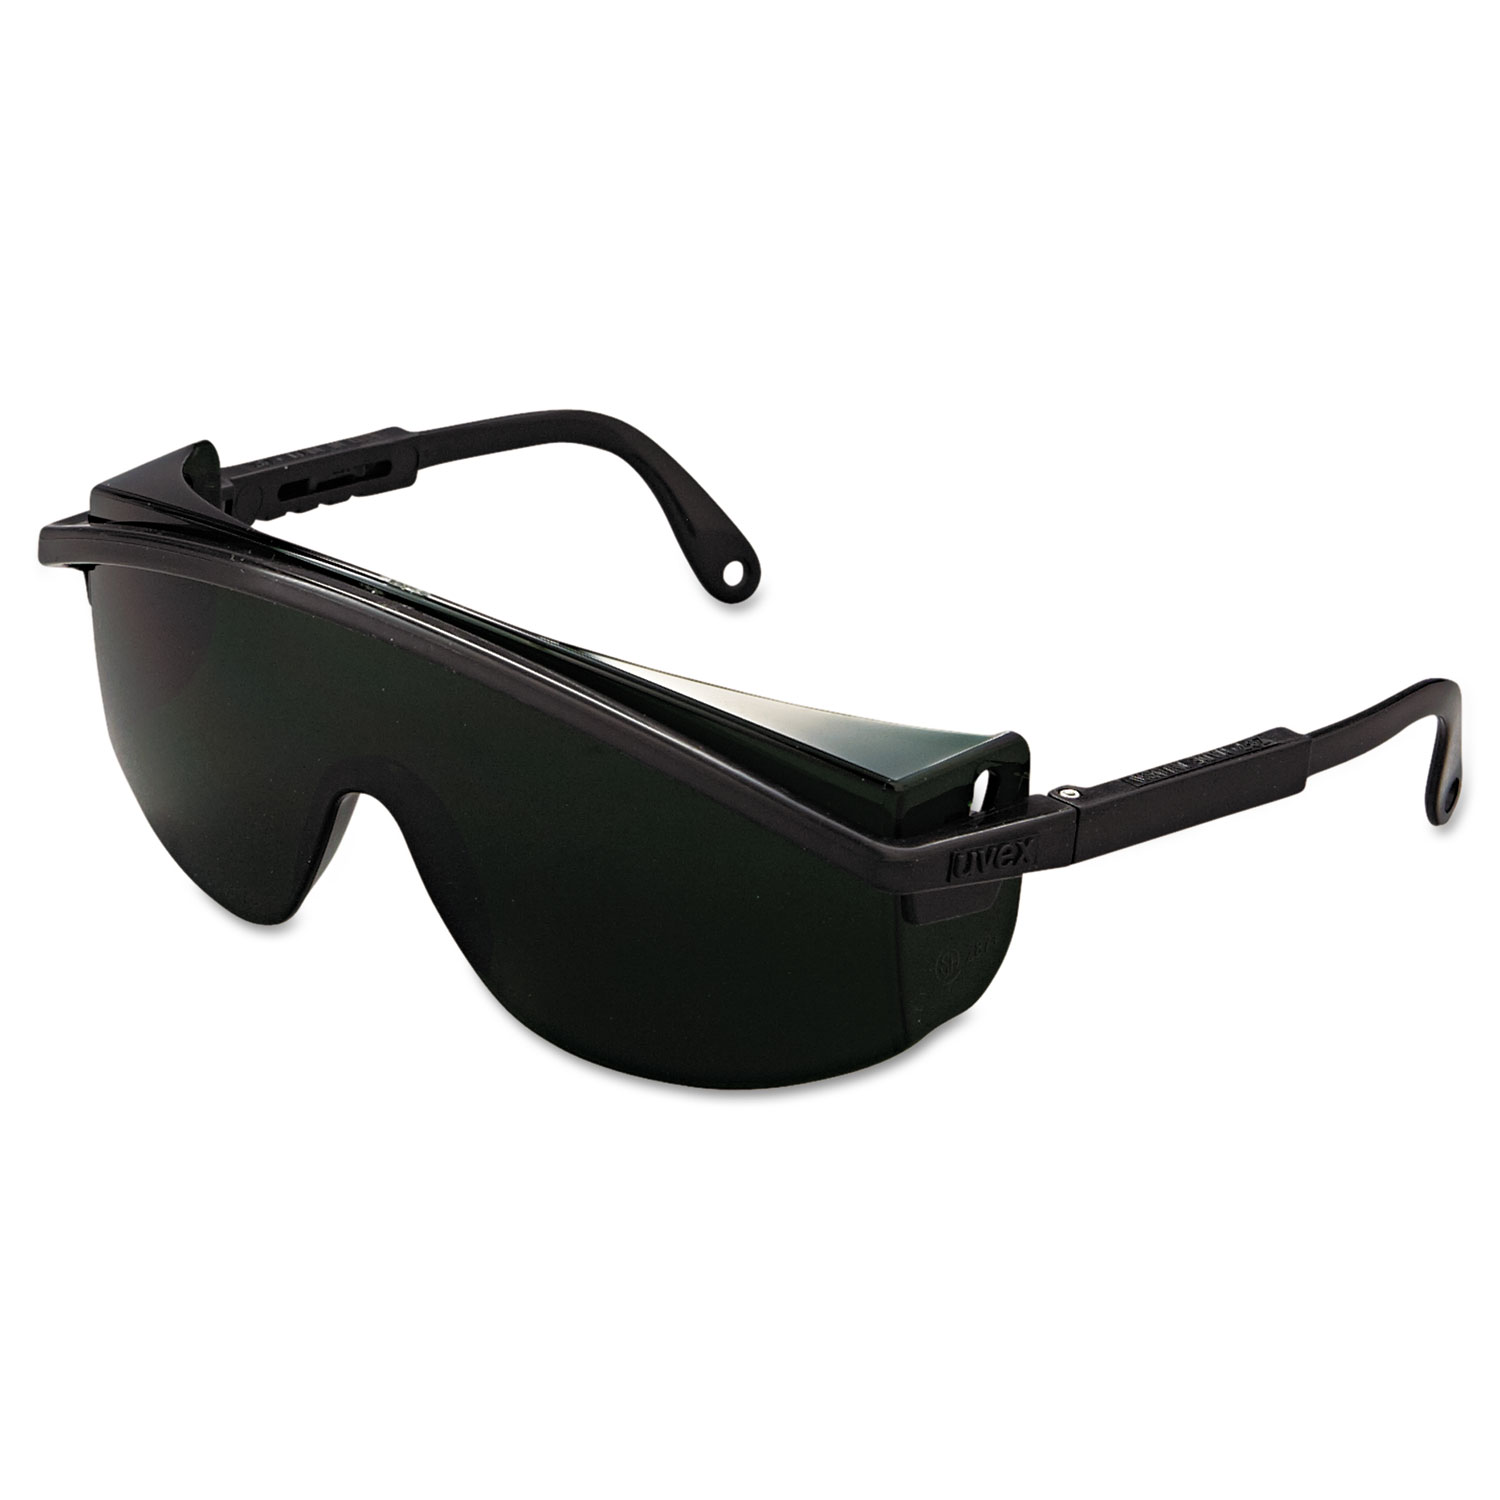  Honeywell Uvex S1112 Astrospec 3000 Safety Glasses, Black Frame, Shade 5.0 Lens (UVXS1112) 